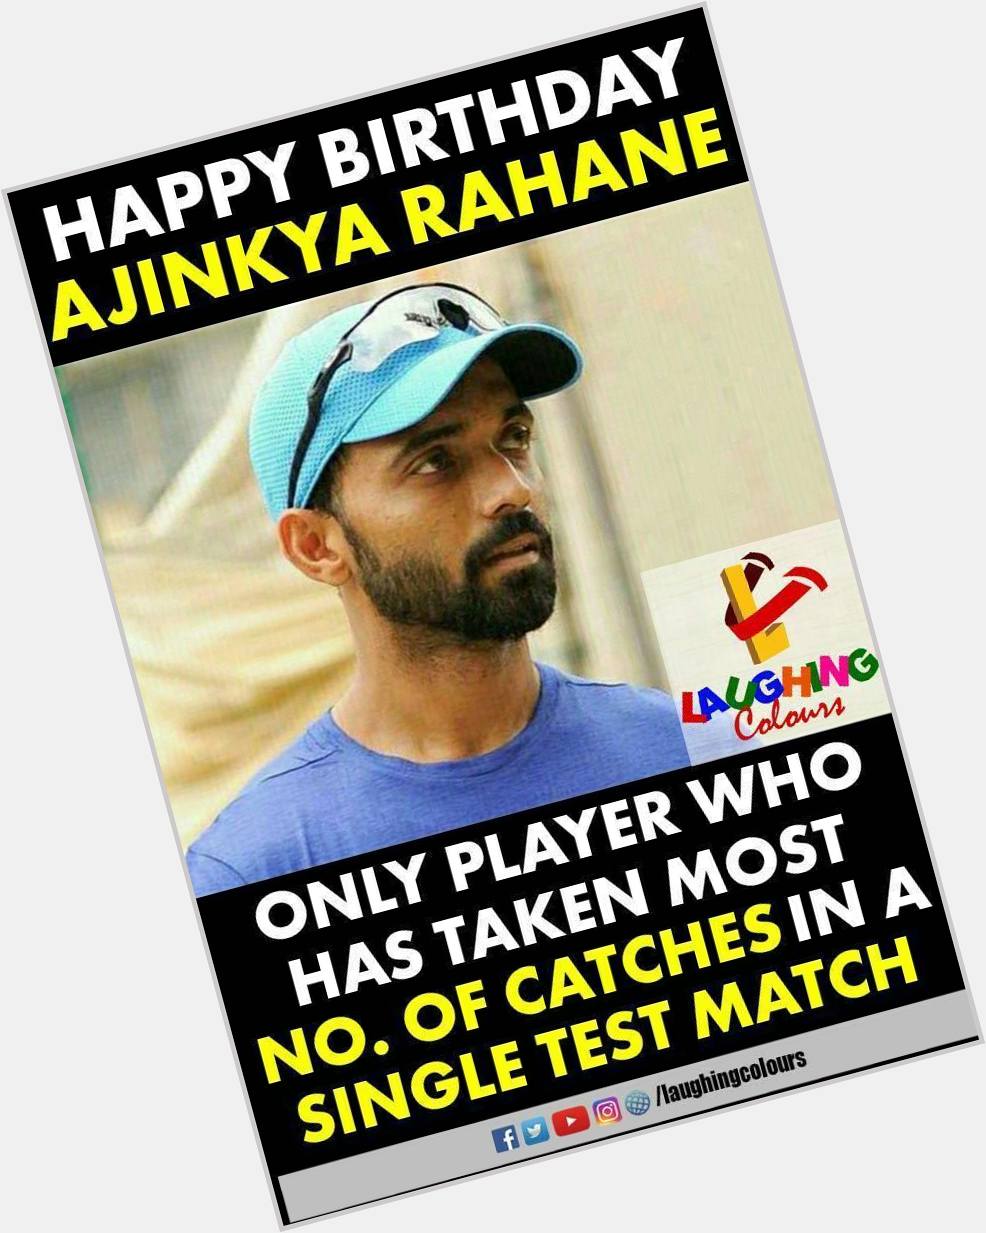 A very Happy birthday ajinkya rahane 